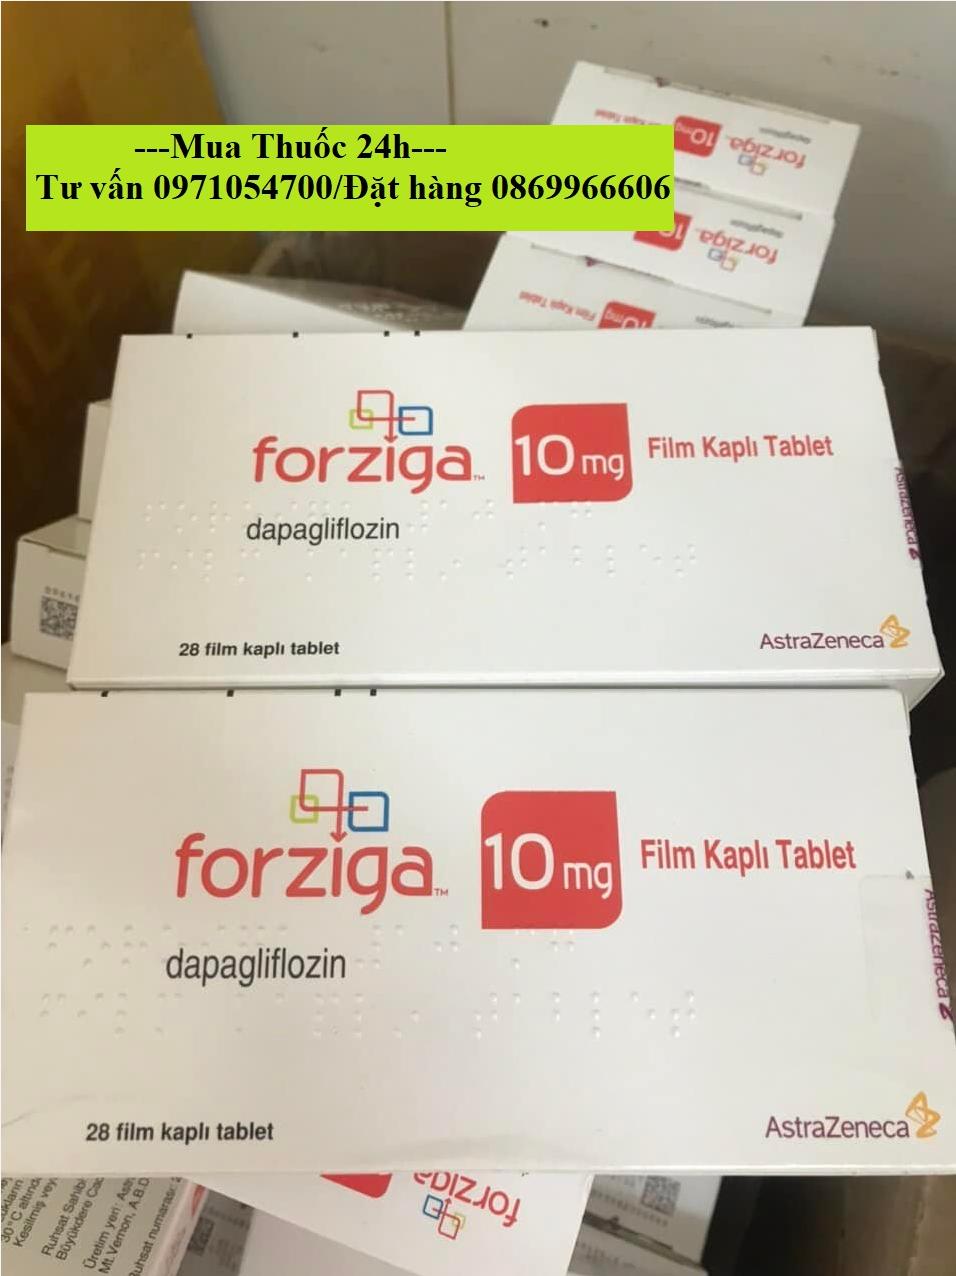 Thuốc Forziga Dapagliflozin 10mg giá bao nhiêu mua ở đâu?